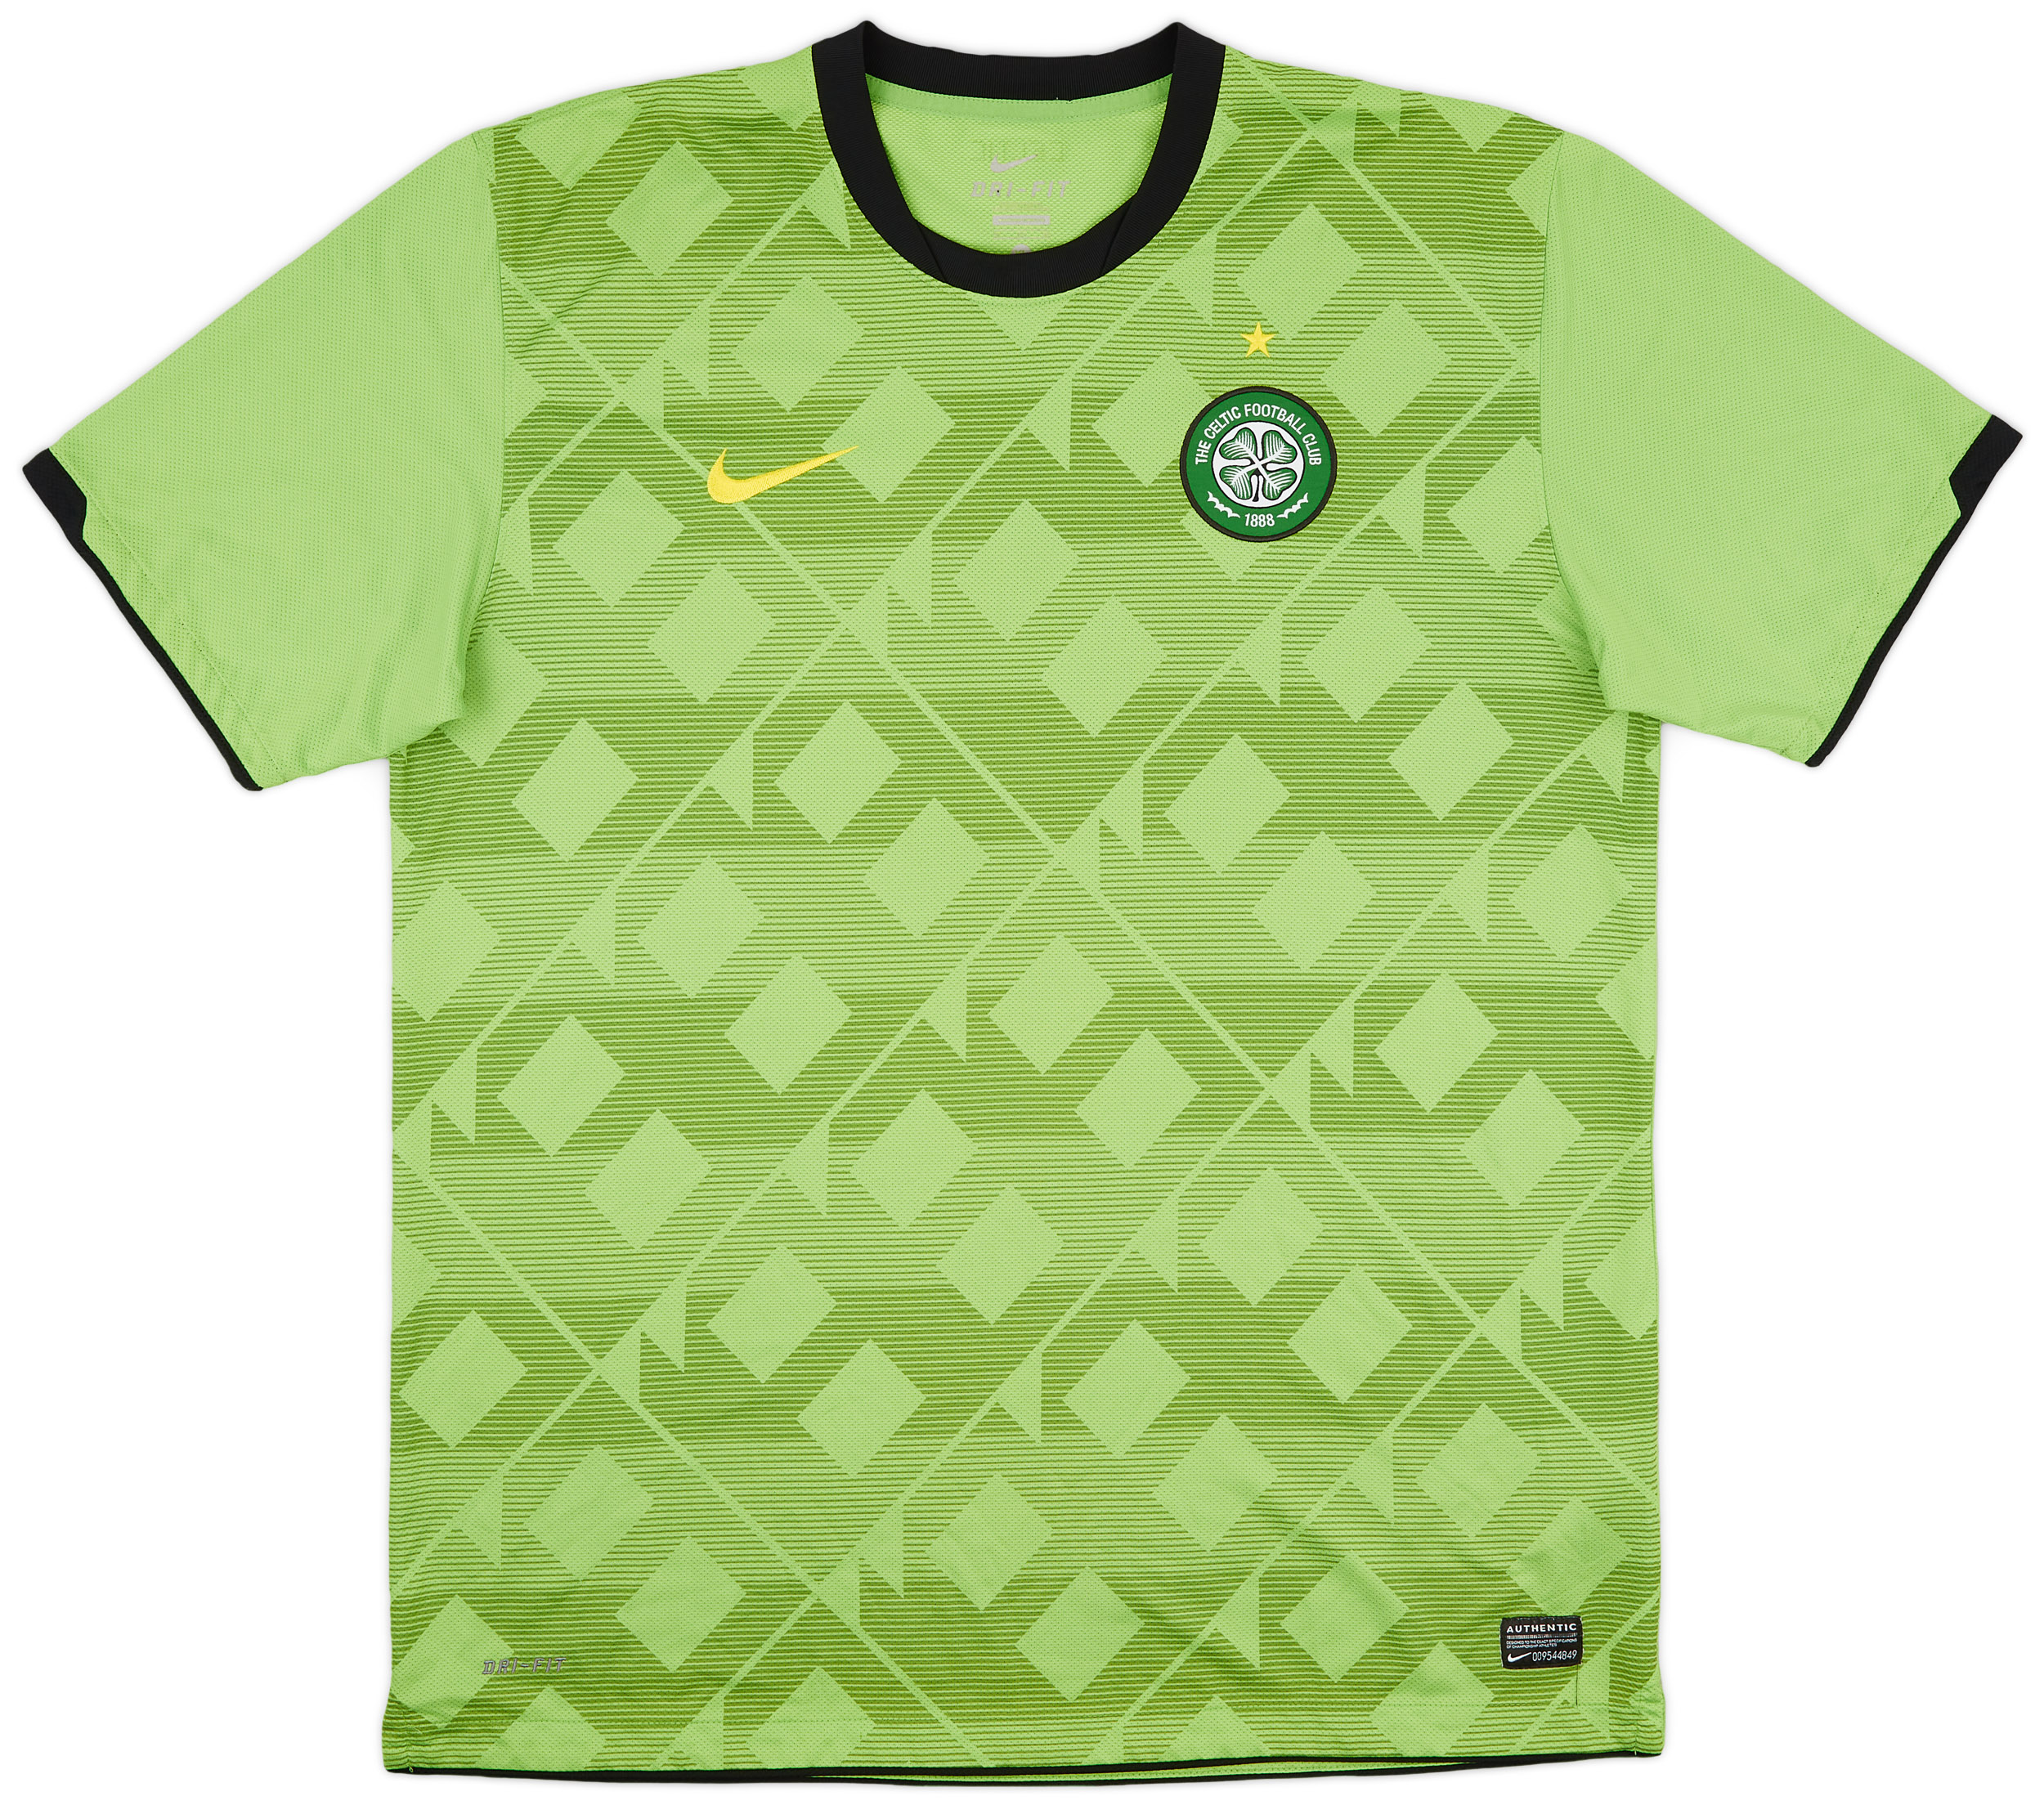 2010-11 Celtic Away Shirt - 8/10 - ()